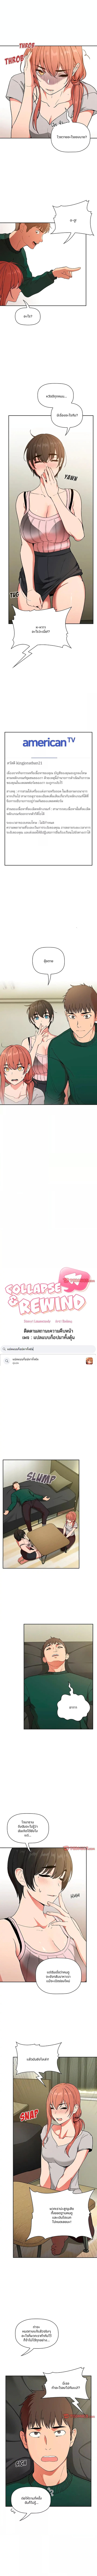 Collapse & Rewind 30 1